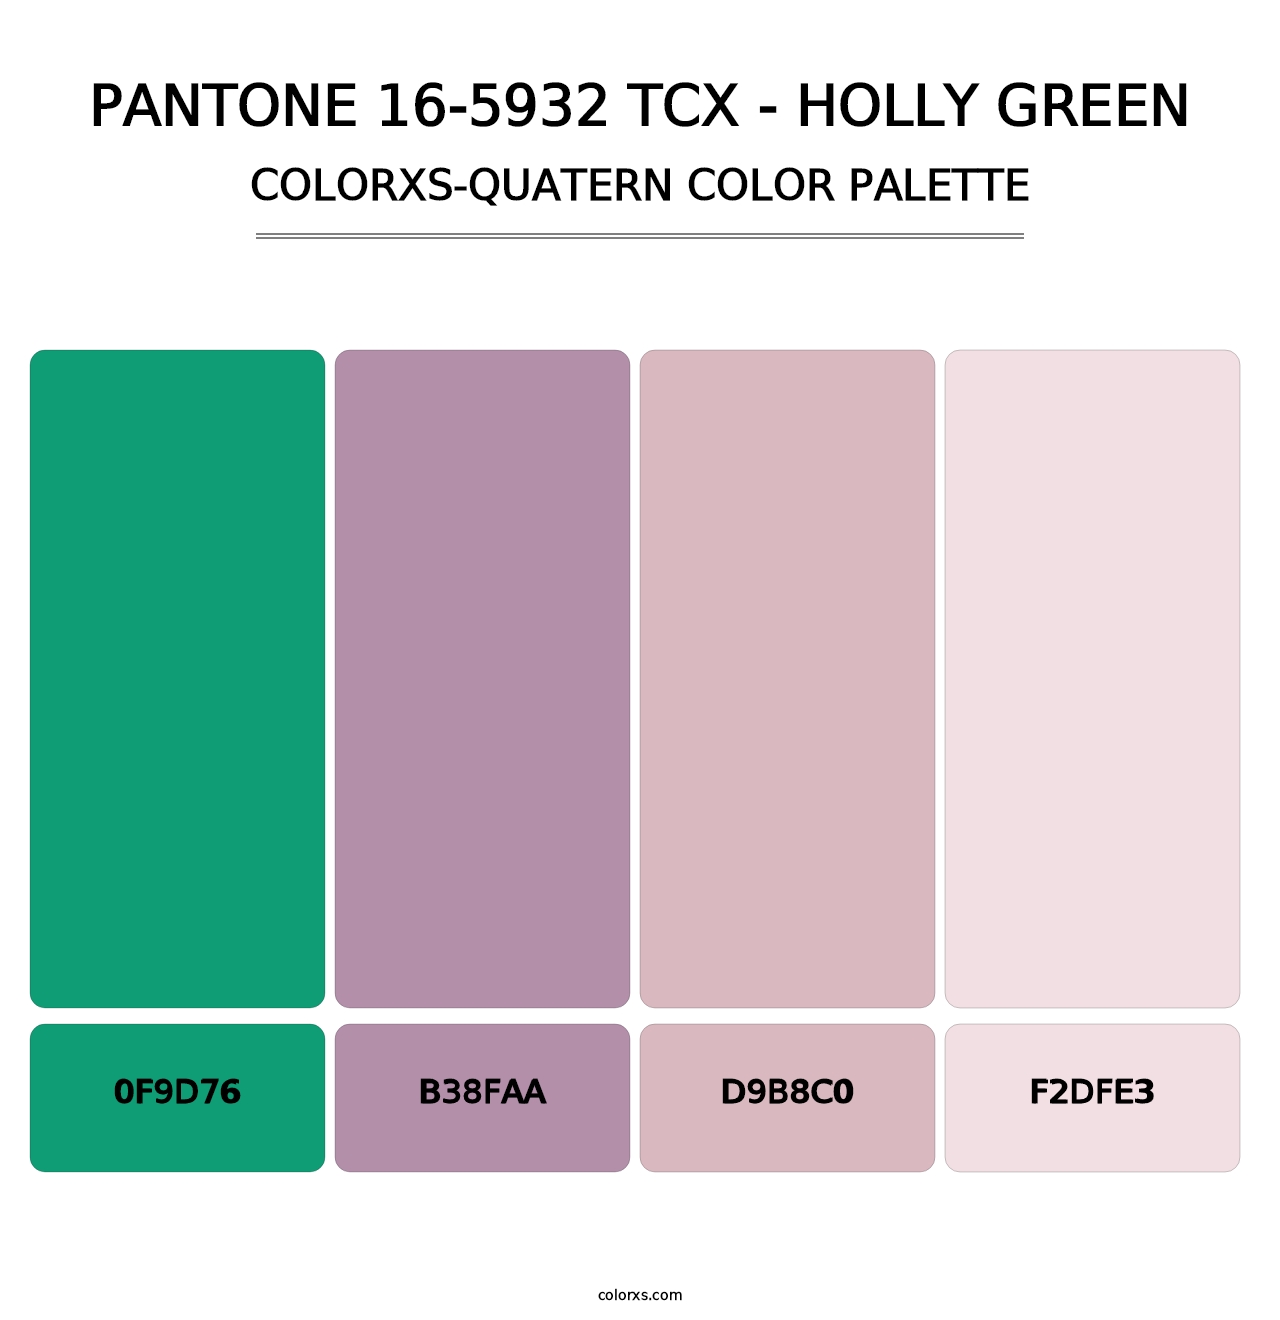 PANTONE 16-5932 TCX - Holly Green - Colorxs Quatern Palette